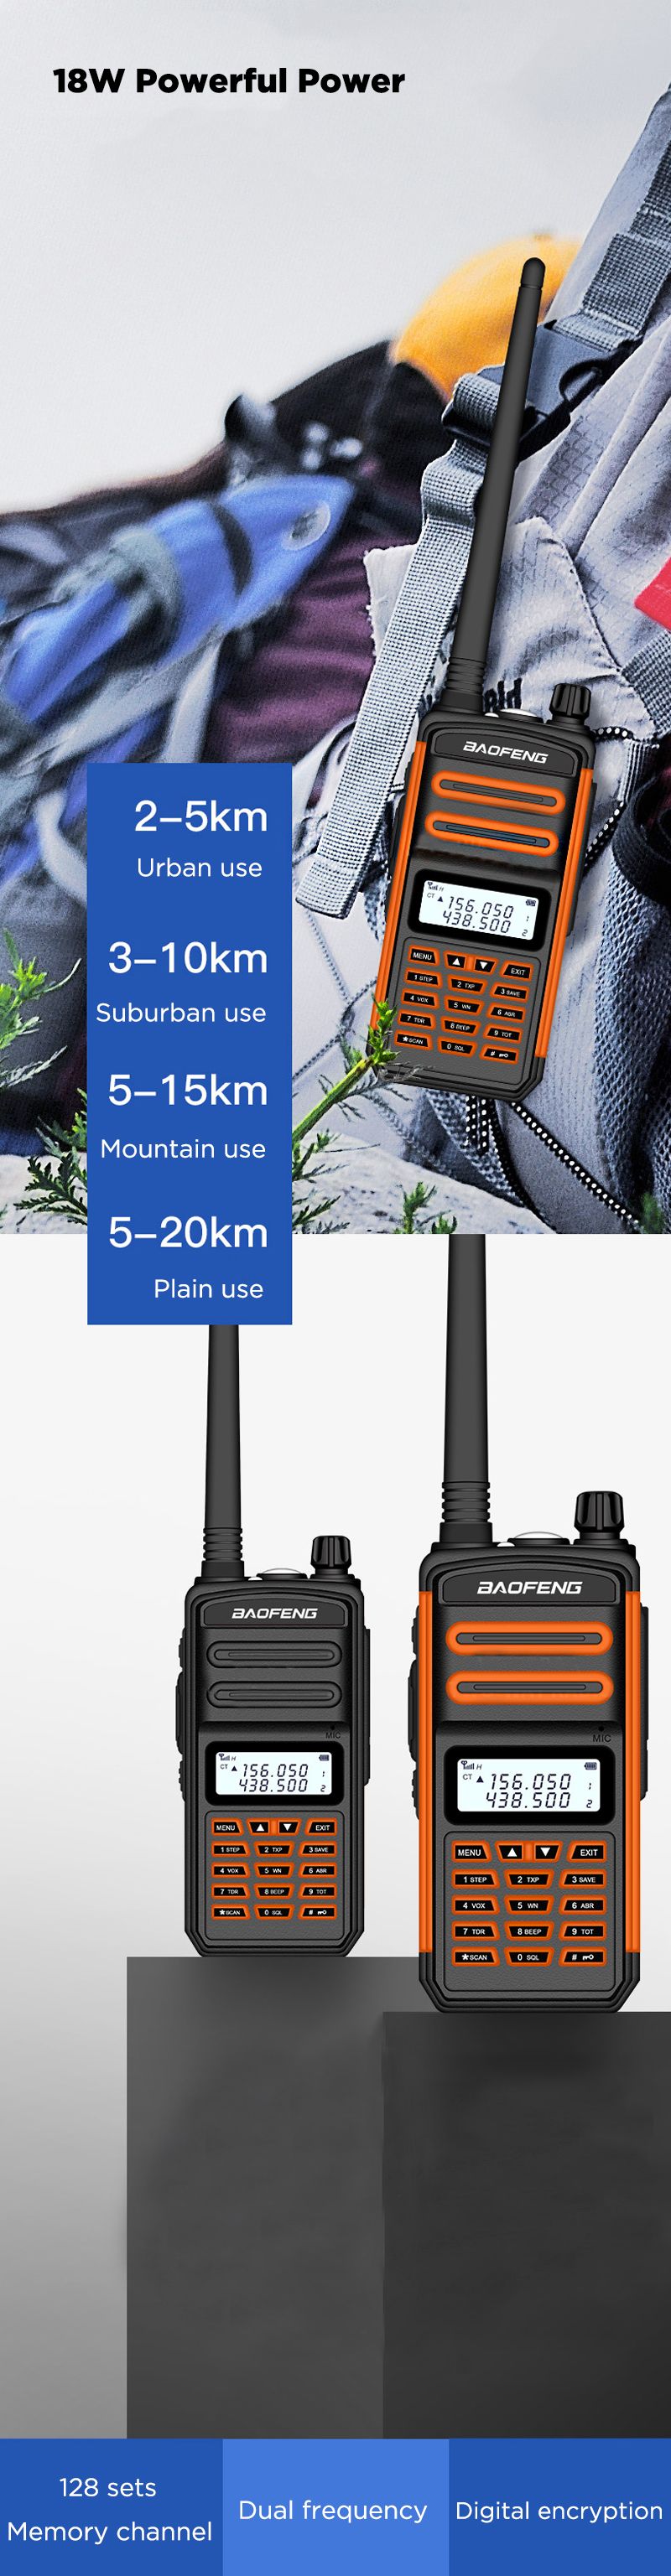 2PCS-BAOFENG-BF-S5plus-18W-Waterproof-UV-Dual-Band-Handheld-Radio-Walkie-Talkie-Flashlight-Hiking-In-1744588